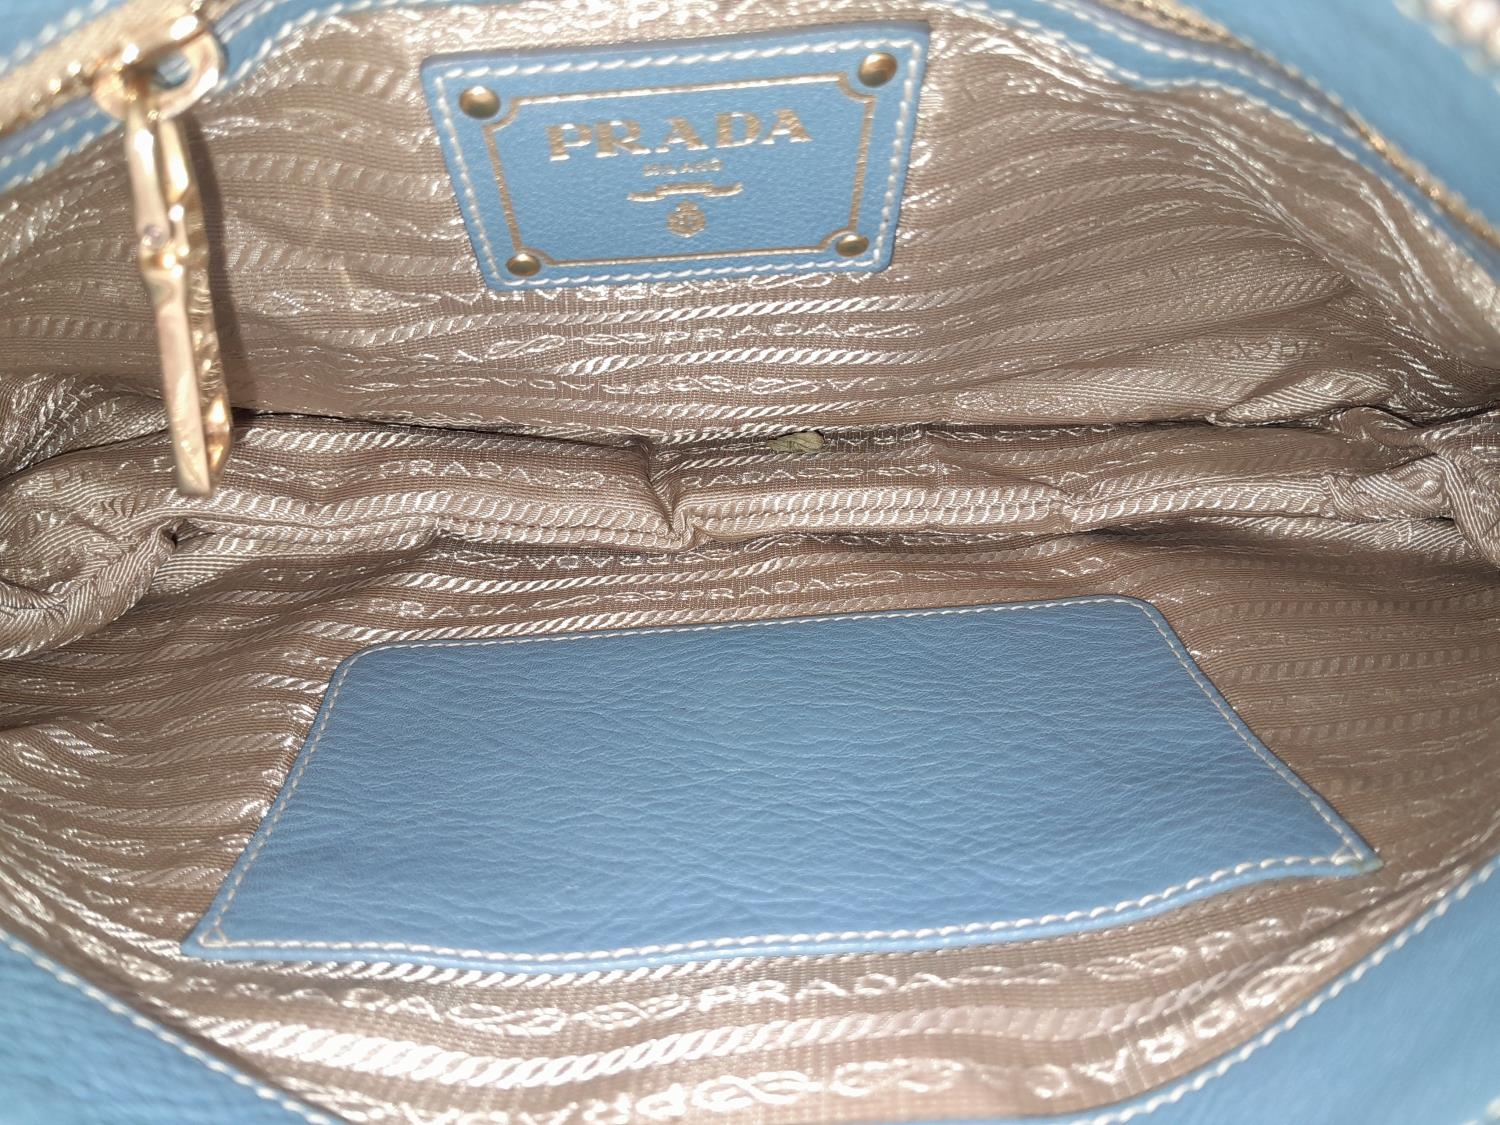 A Prada Marine Blue Vitello Daino Shoulder Bag. Leather exterior with gold-toned hardware, - Image 7 of 8